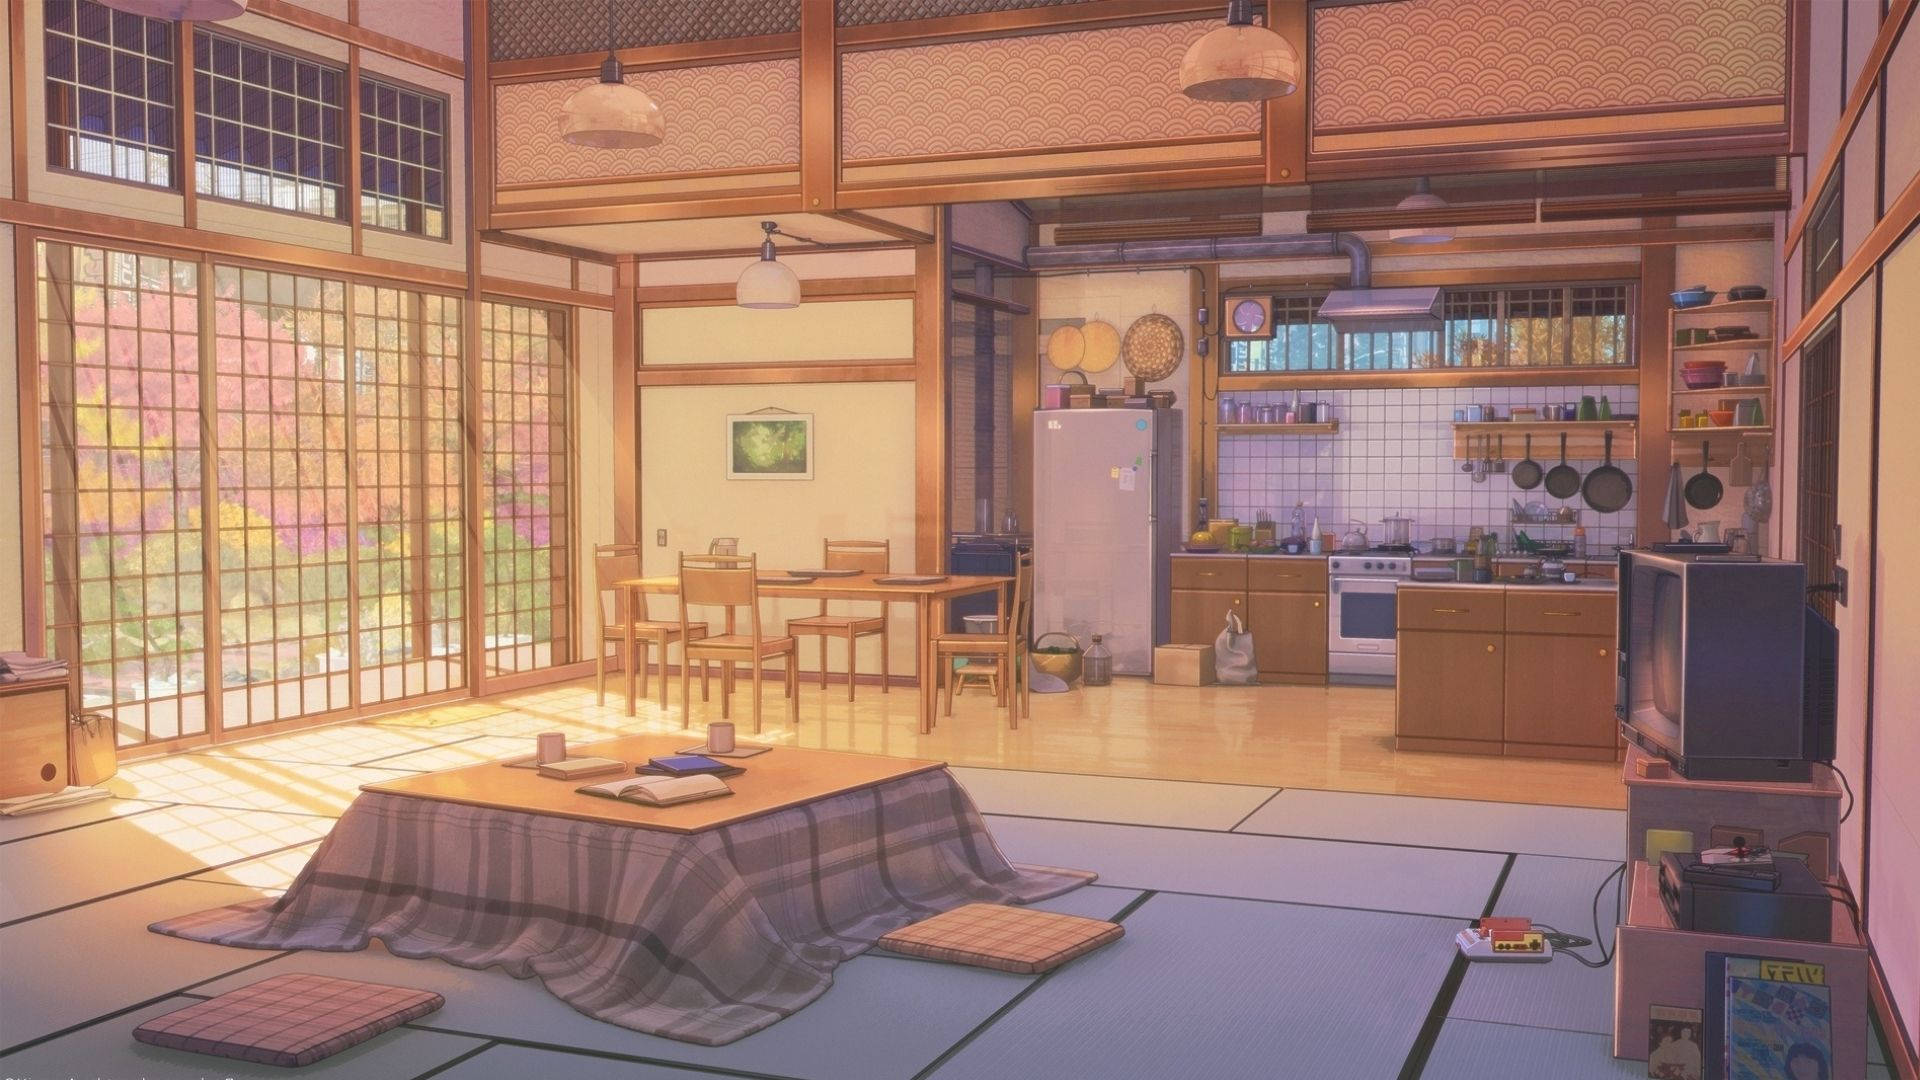 Download Anime Room At Daytime Wallpaper 